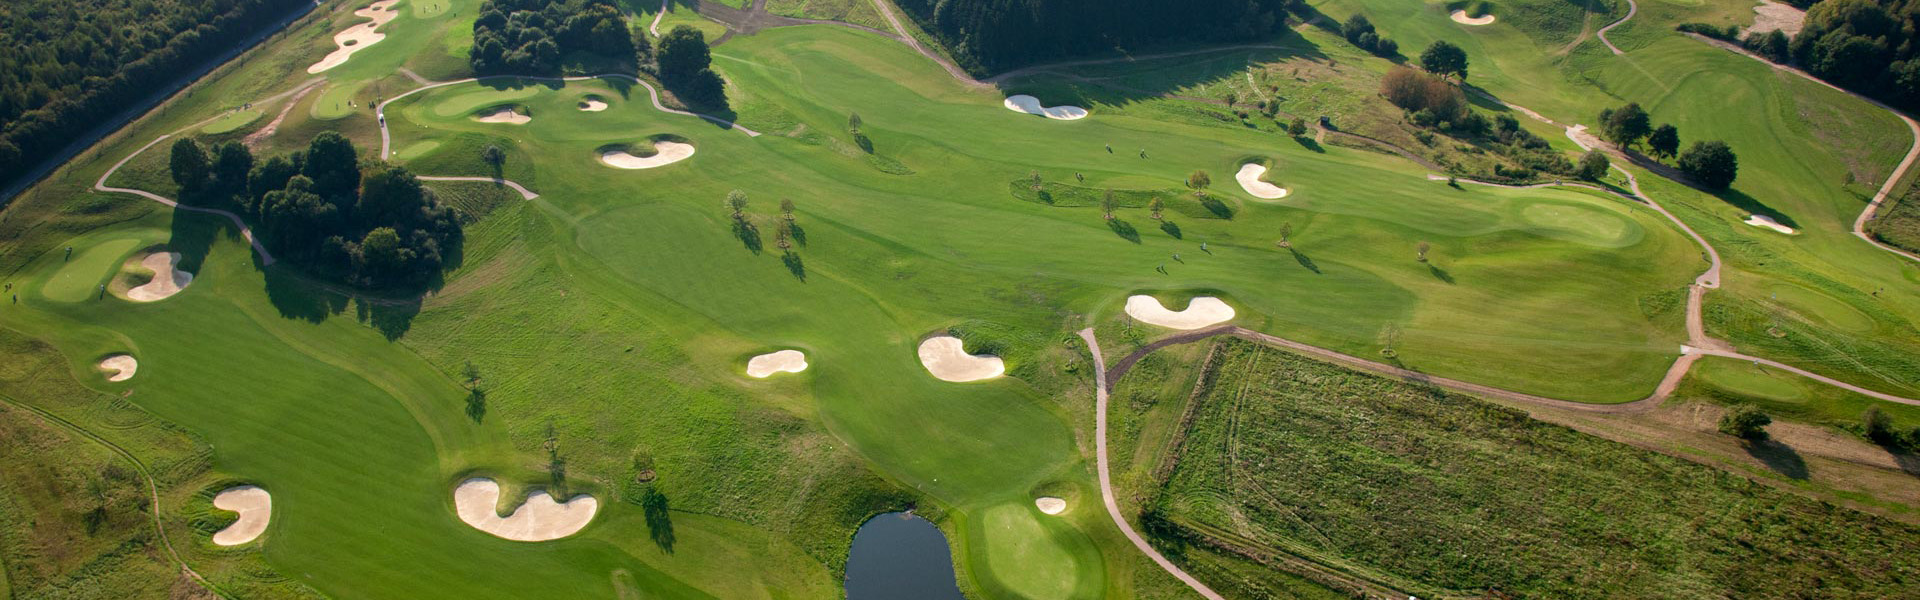 Golf-Trips-Golfpark-Weiherhof9